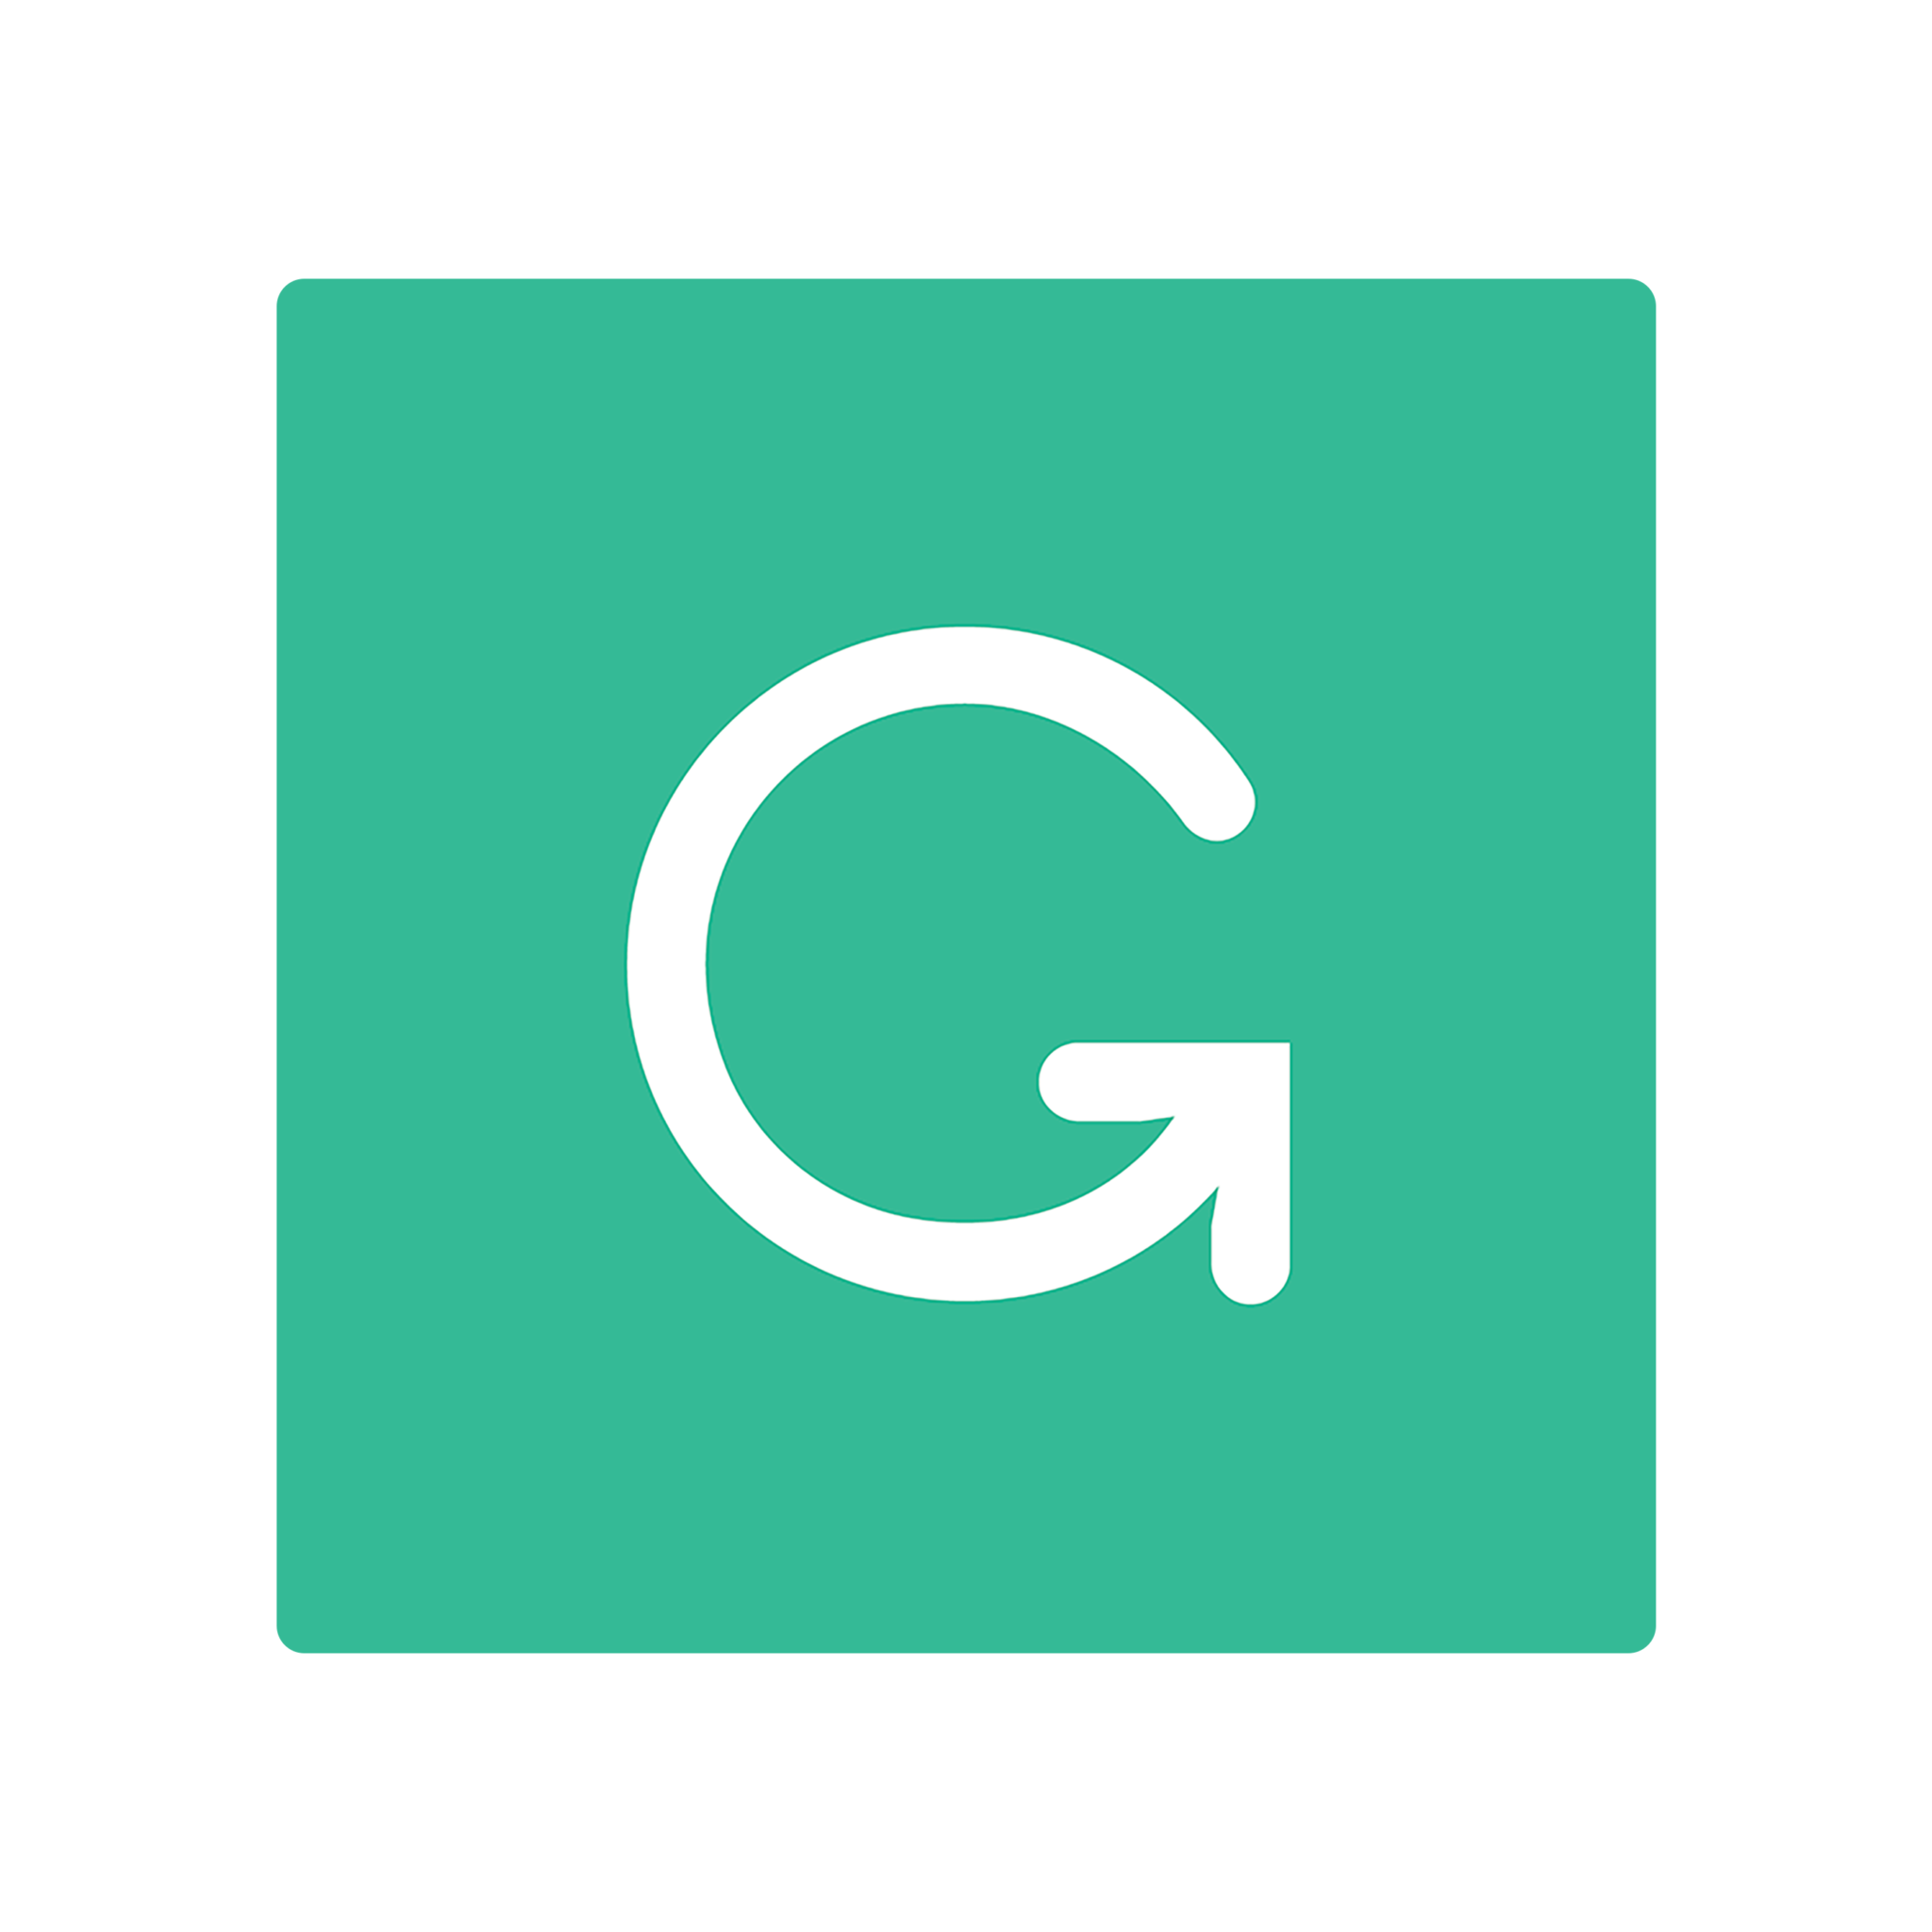 Grammerly app logo